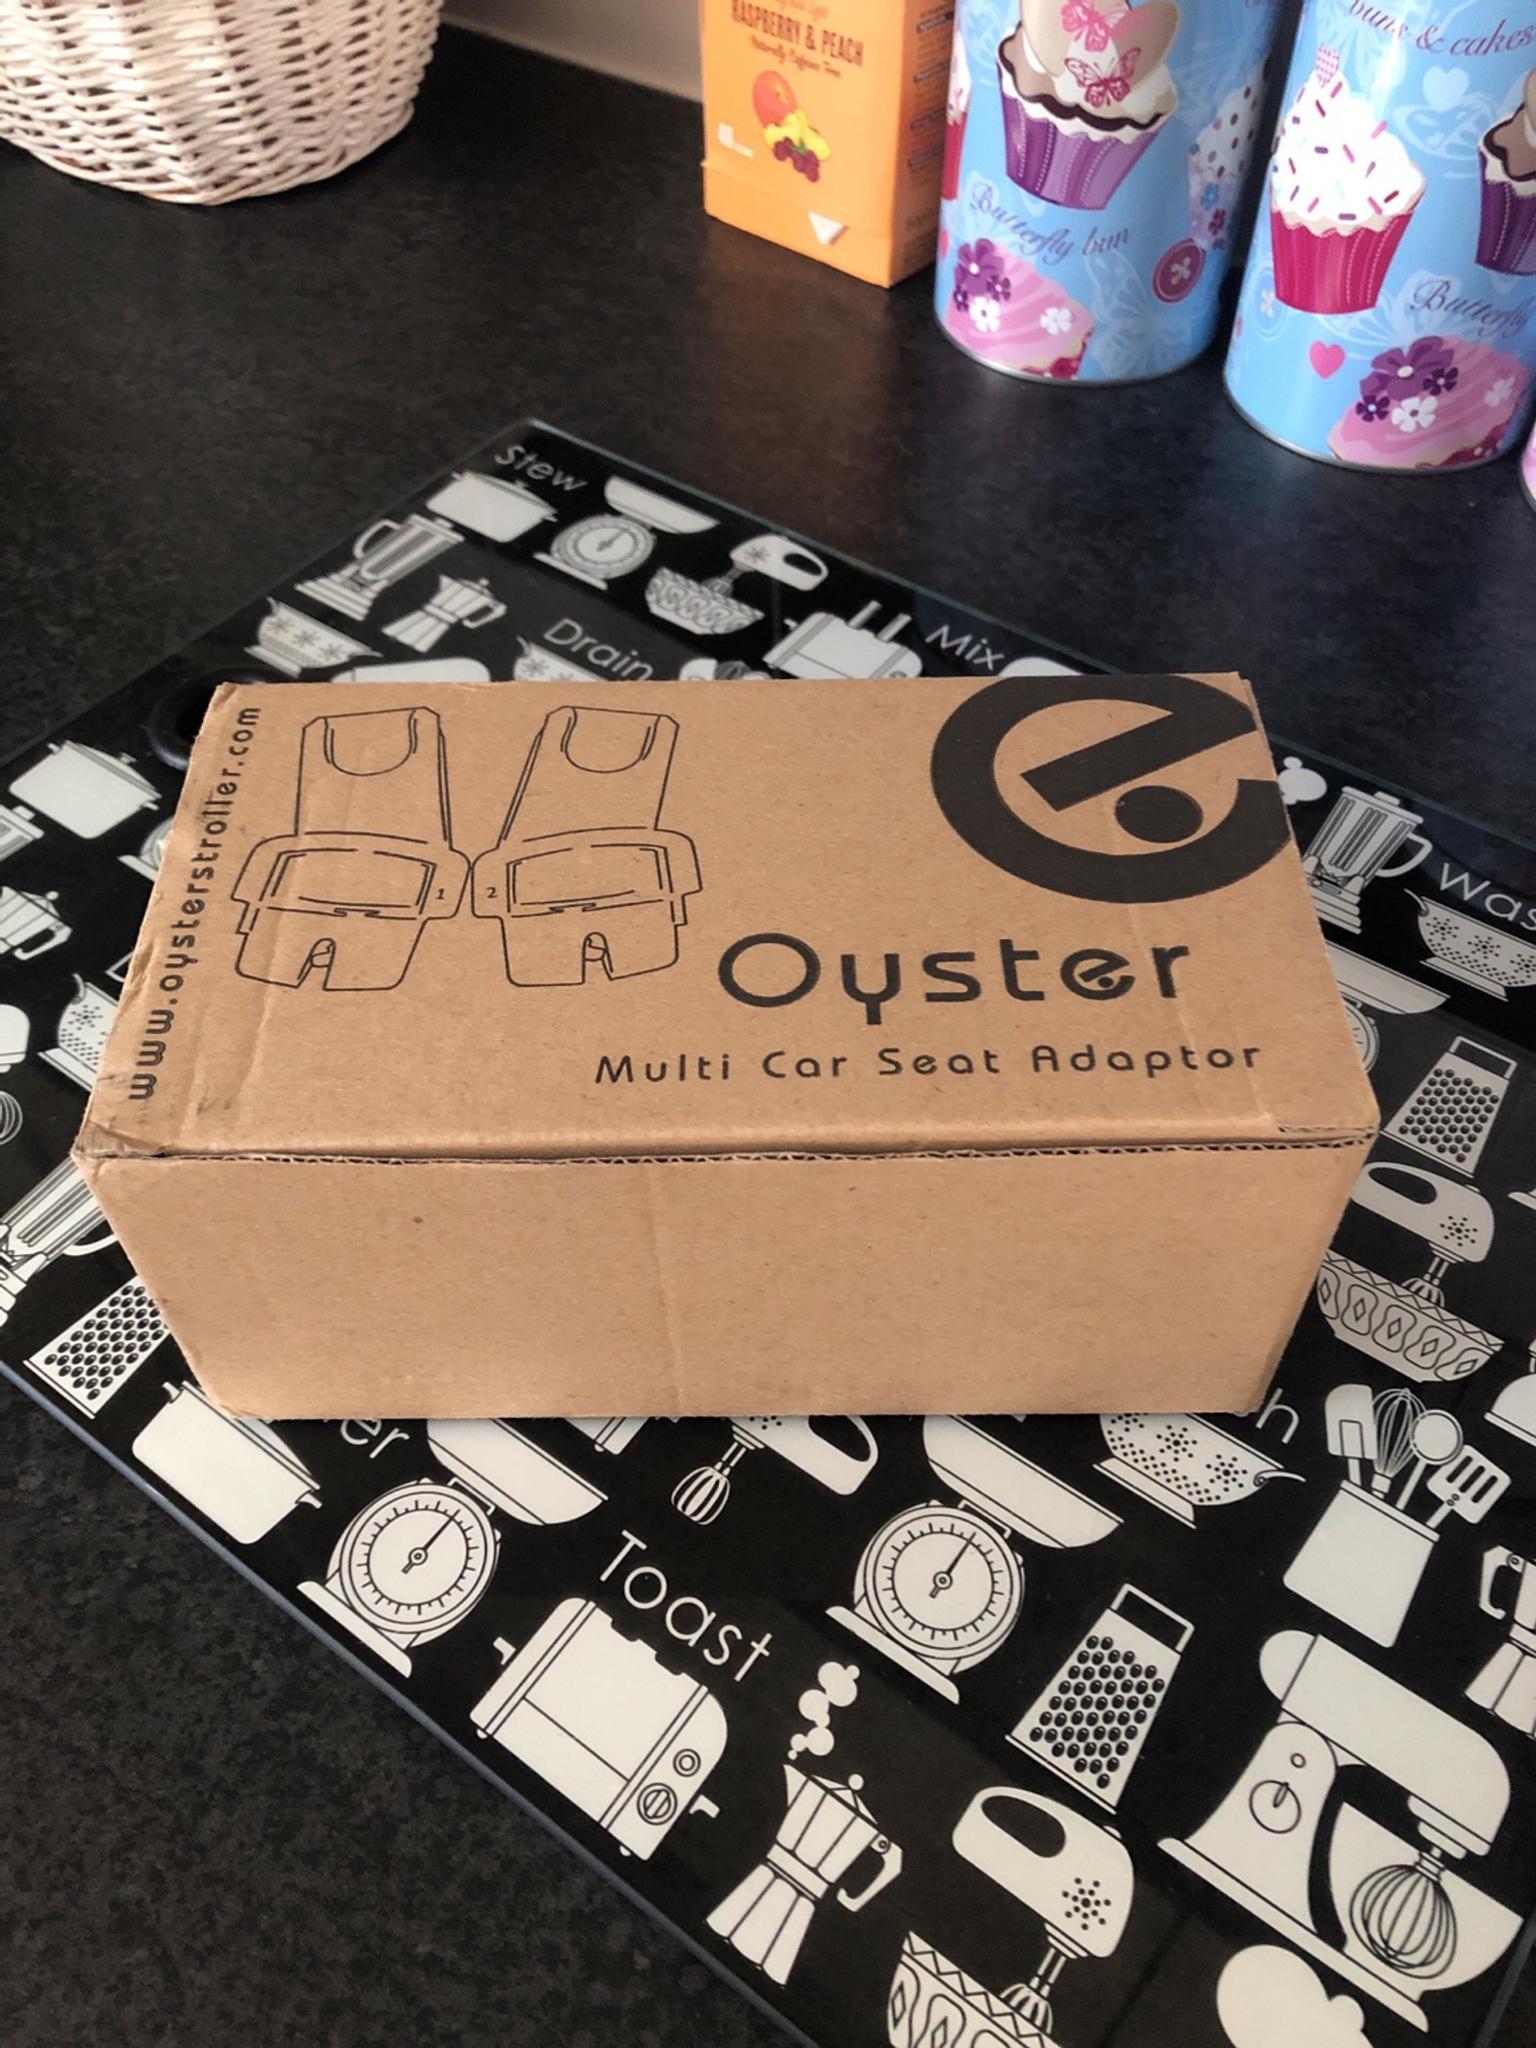 oyster 2 multi car seat adaptors